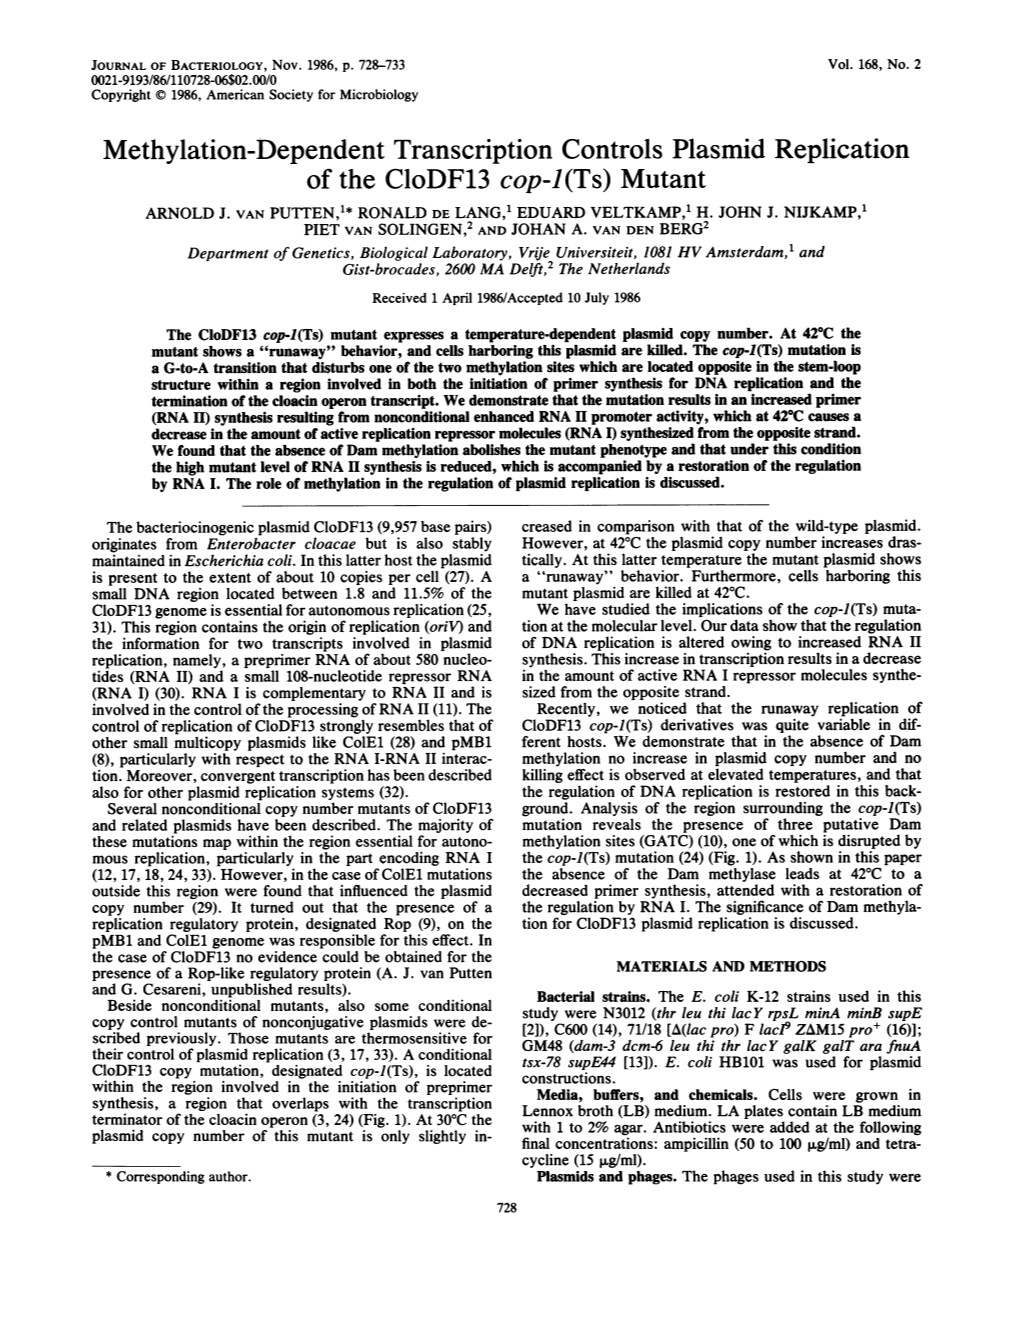 Methylation-Dependent Transcription Controls Plasmid Replication of the Clodf13 Cop-I(Ts) Mutant ARNOLD J